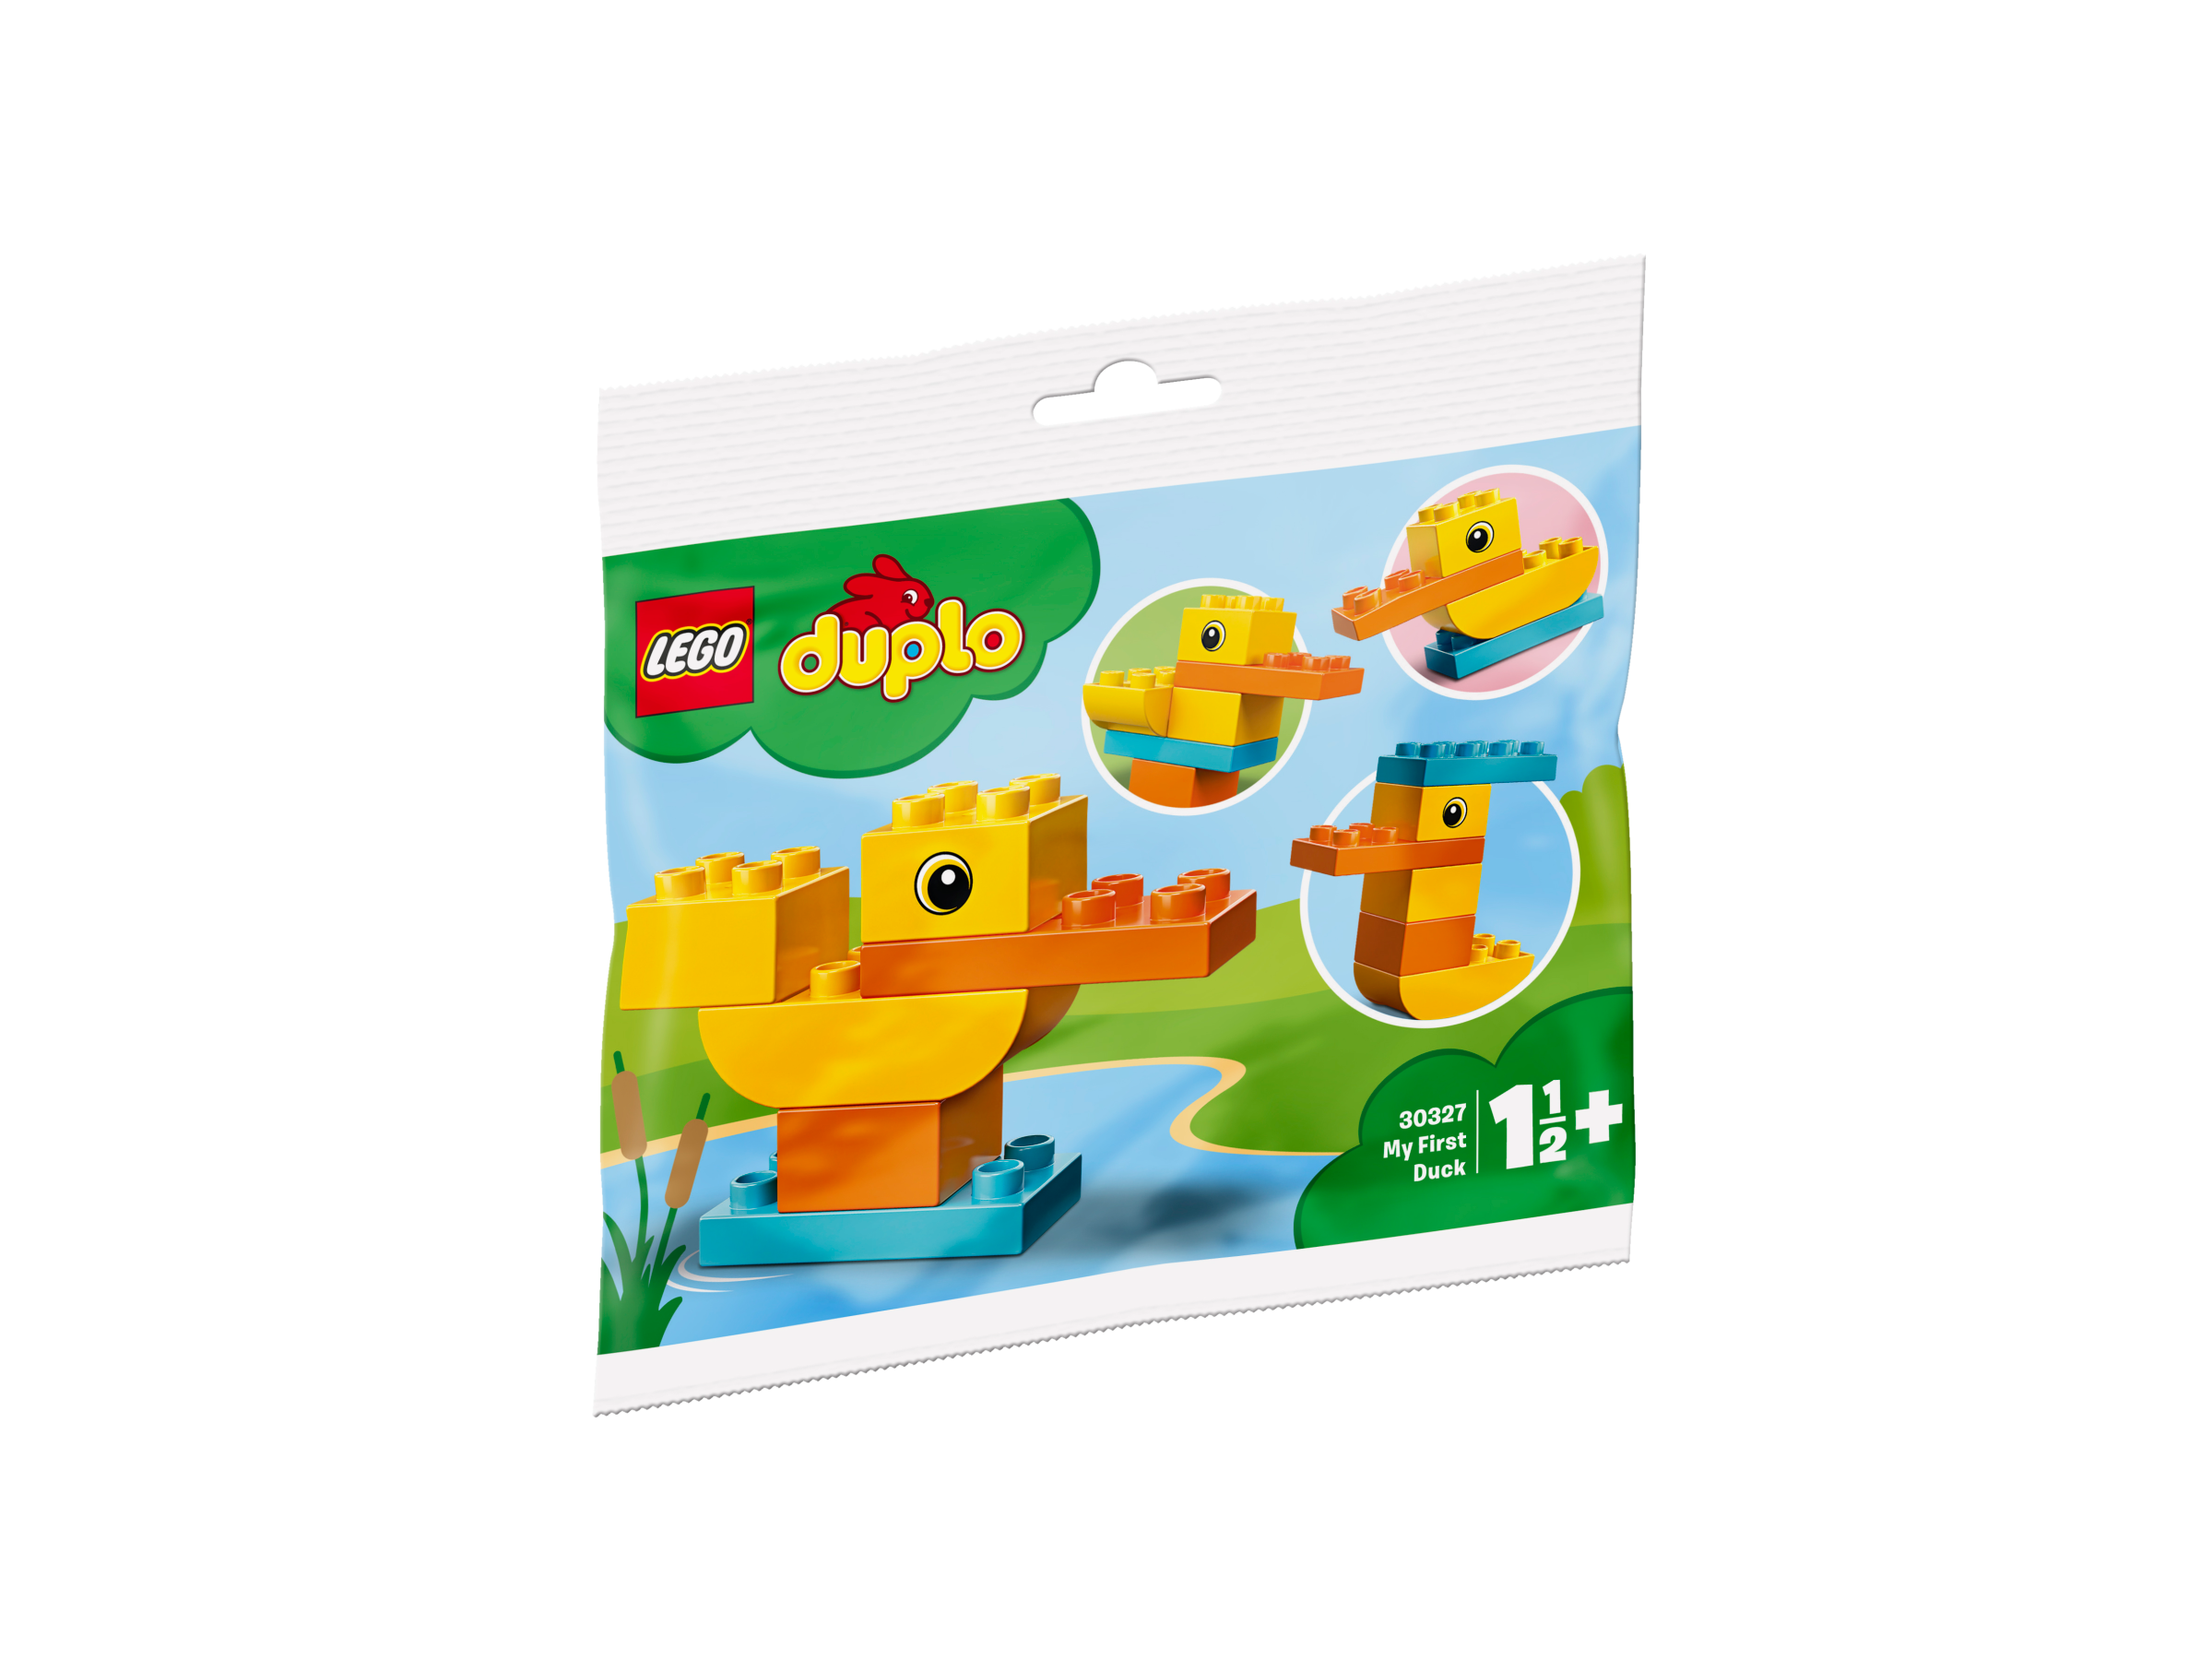 LEGO® DUPLO® 30327 Meine erste Ente Polybag